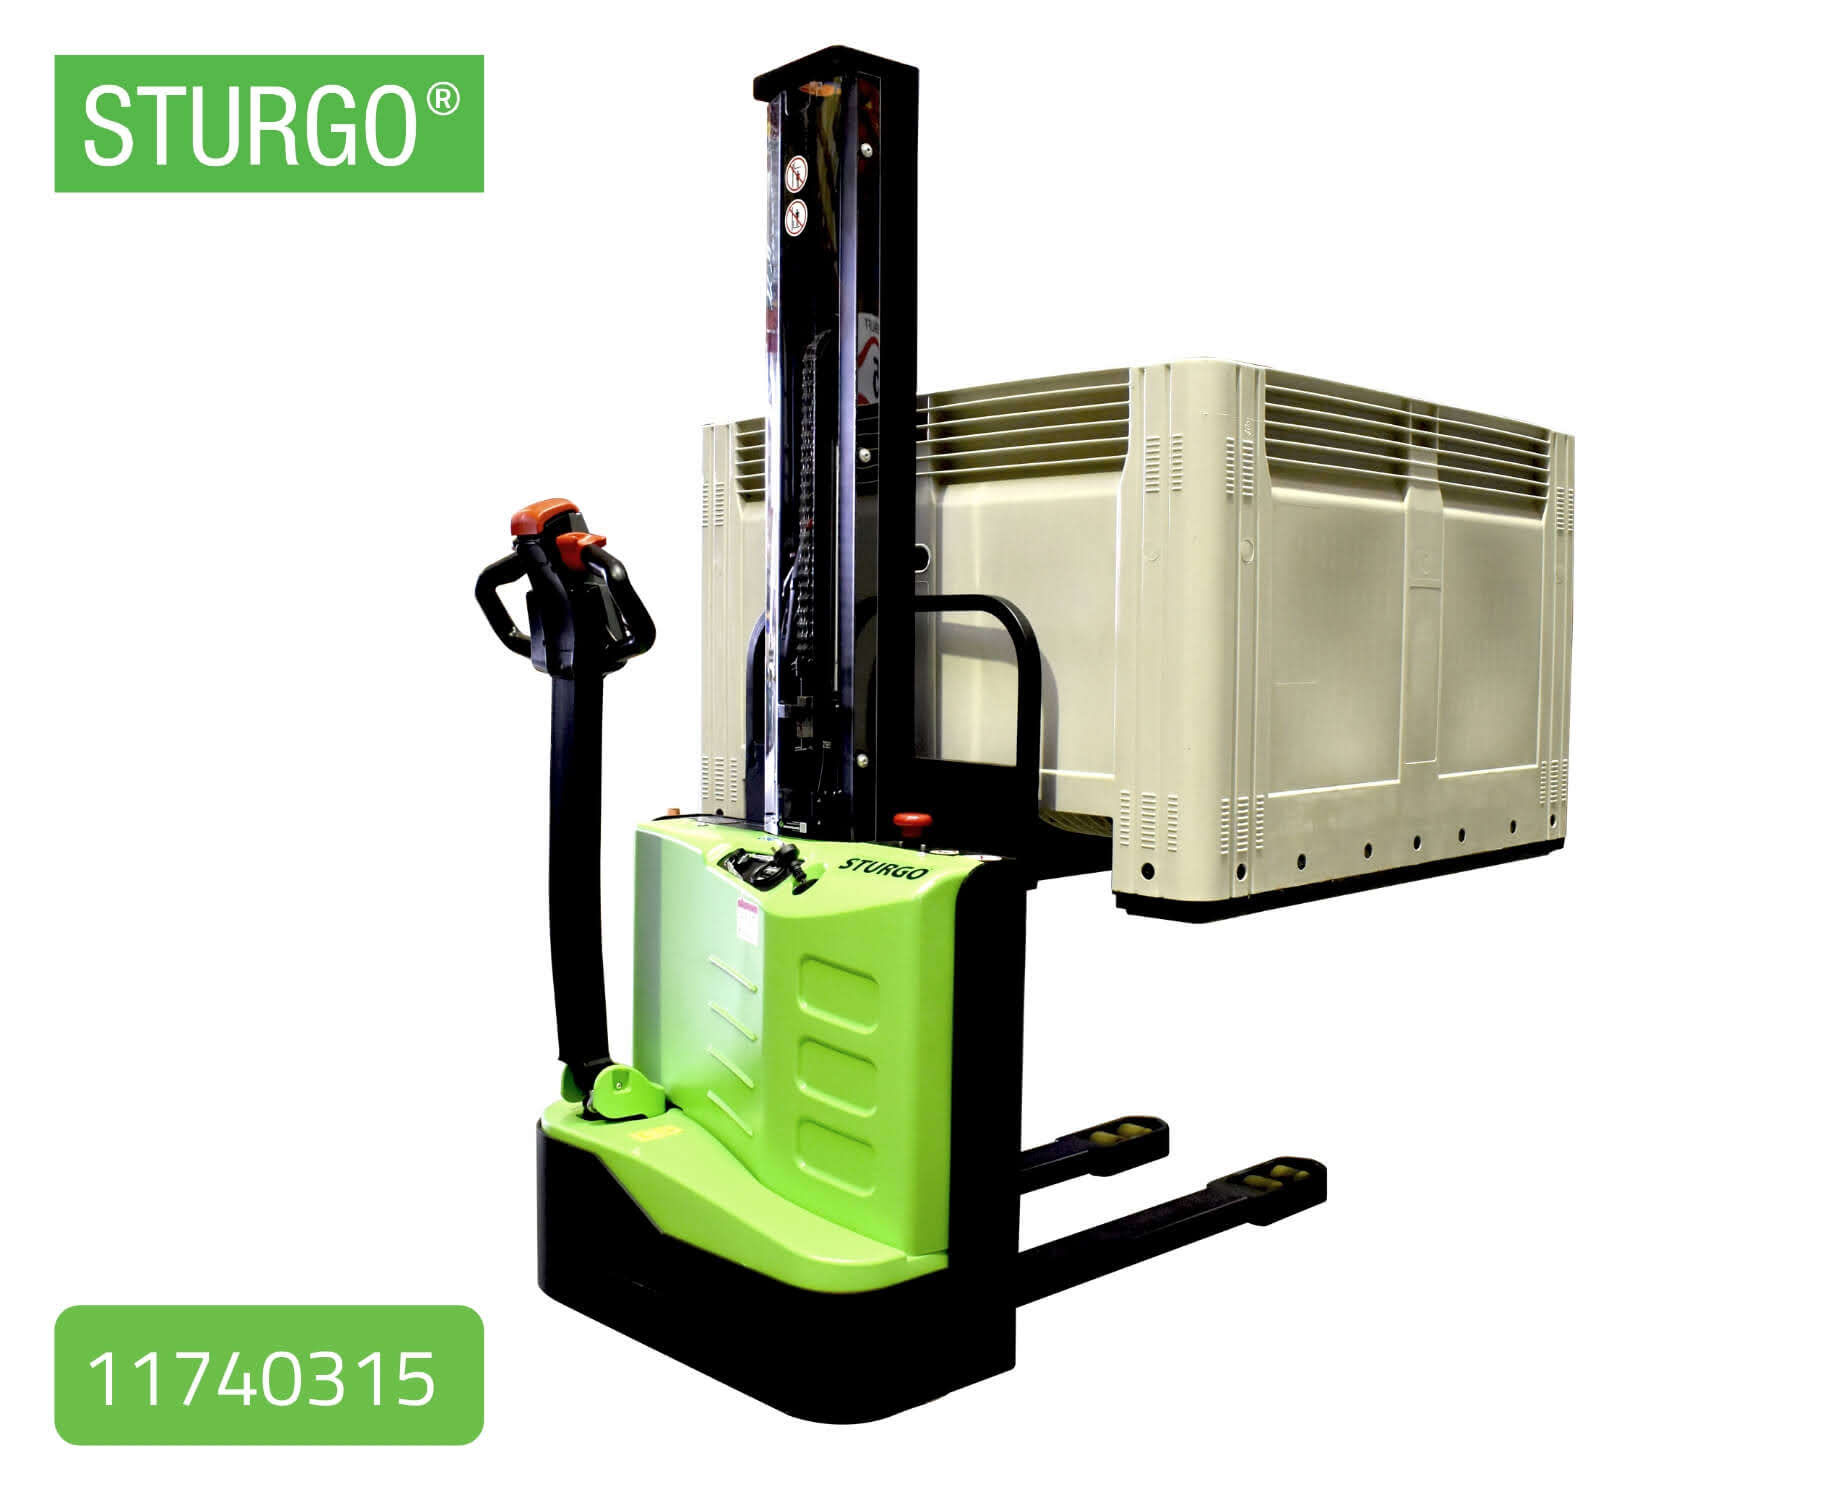 STURGO® Compact Electric Non-Straddle Stacker